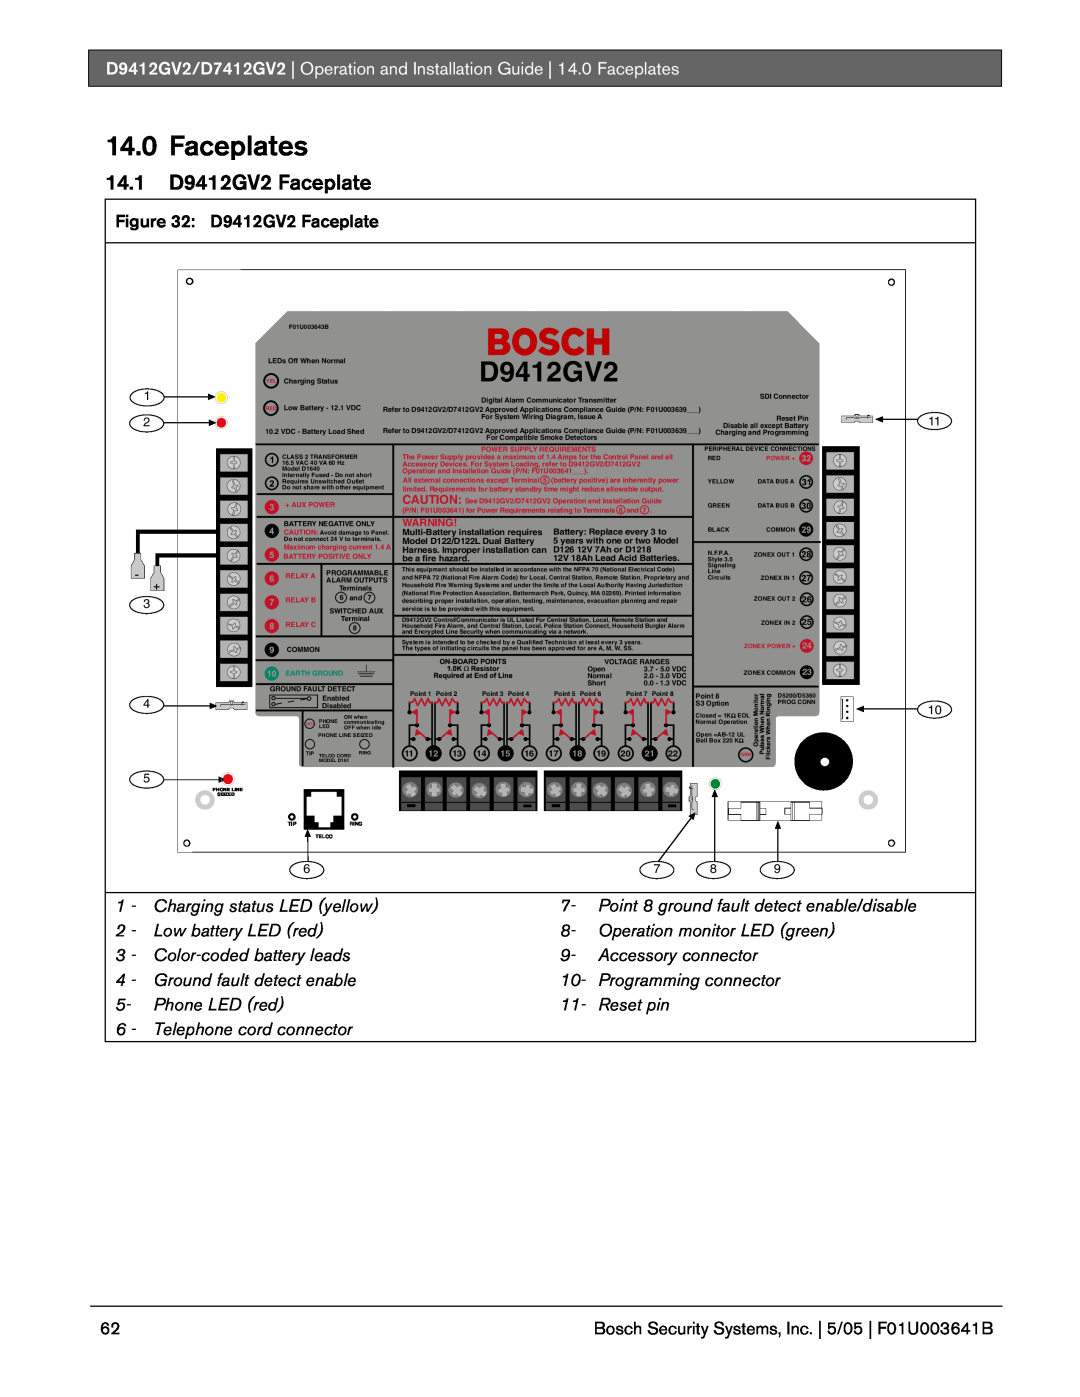 Bosch Appliances manual 14.0Faceplates, 14.1D9412GV2 Faceplate 